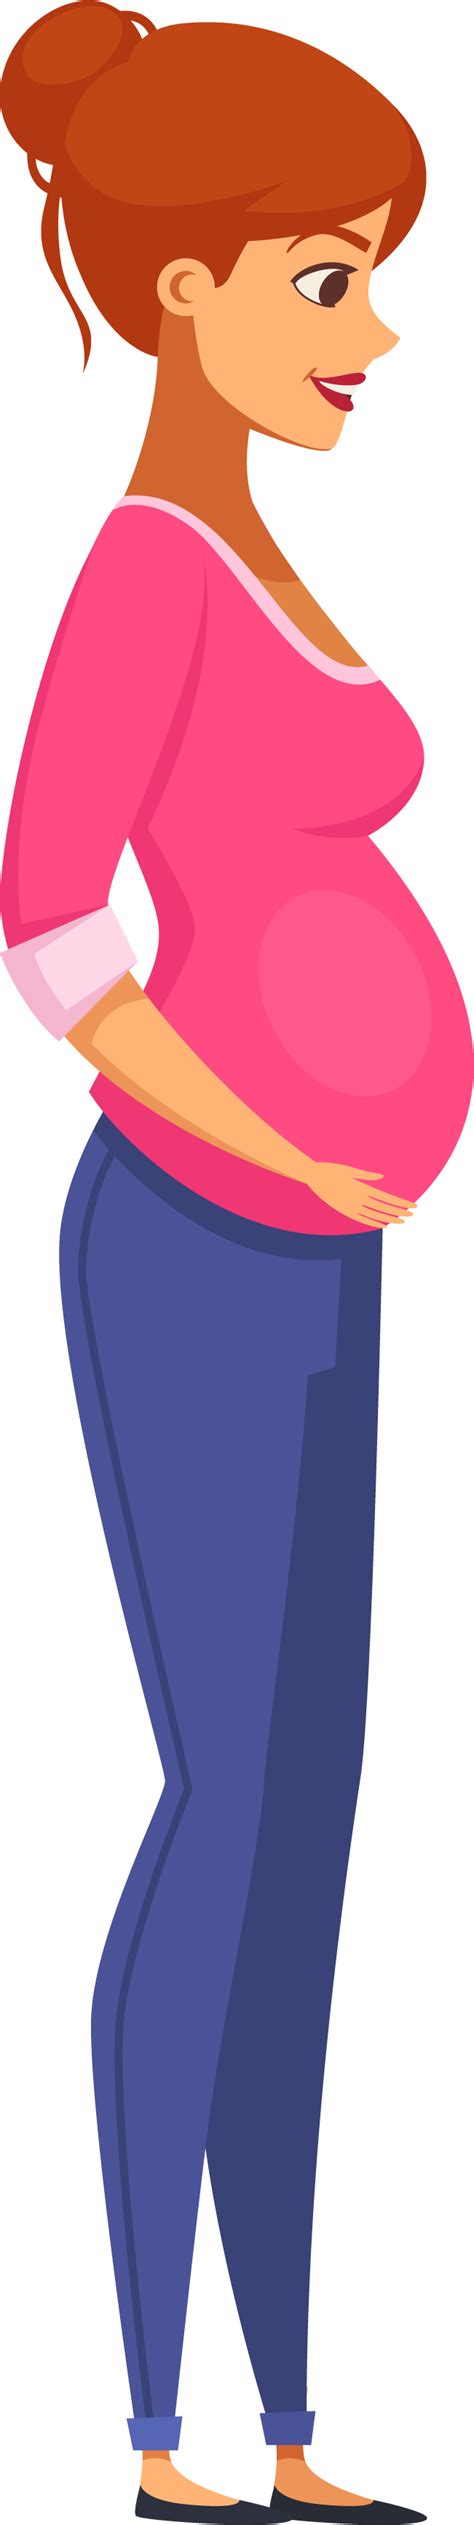 Free Pregnancy Pregnancy Newborn Cartoon Vector 851824